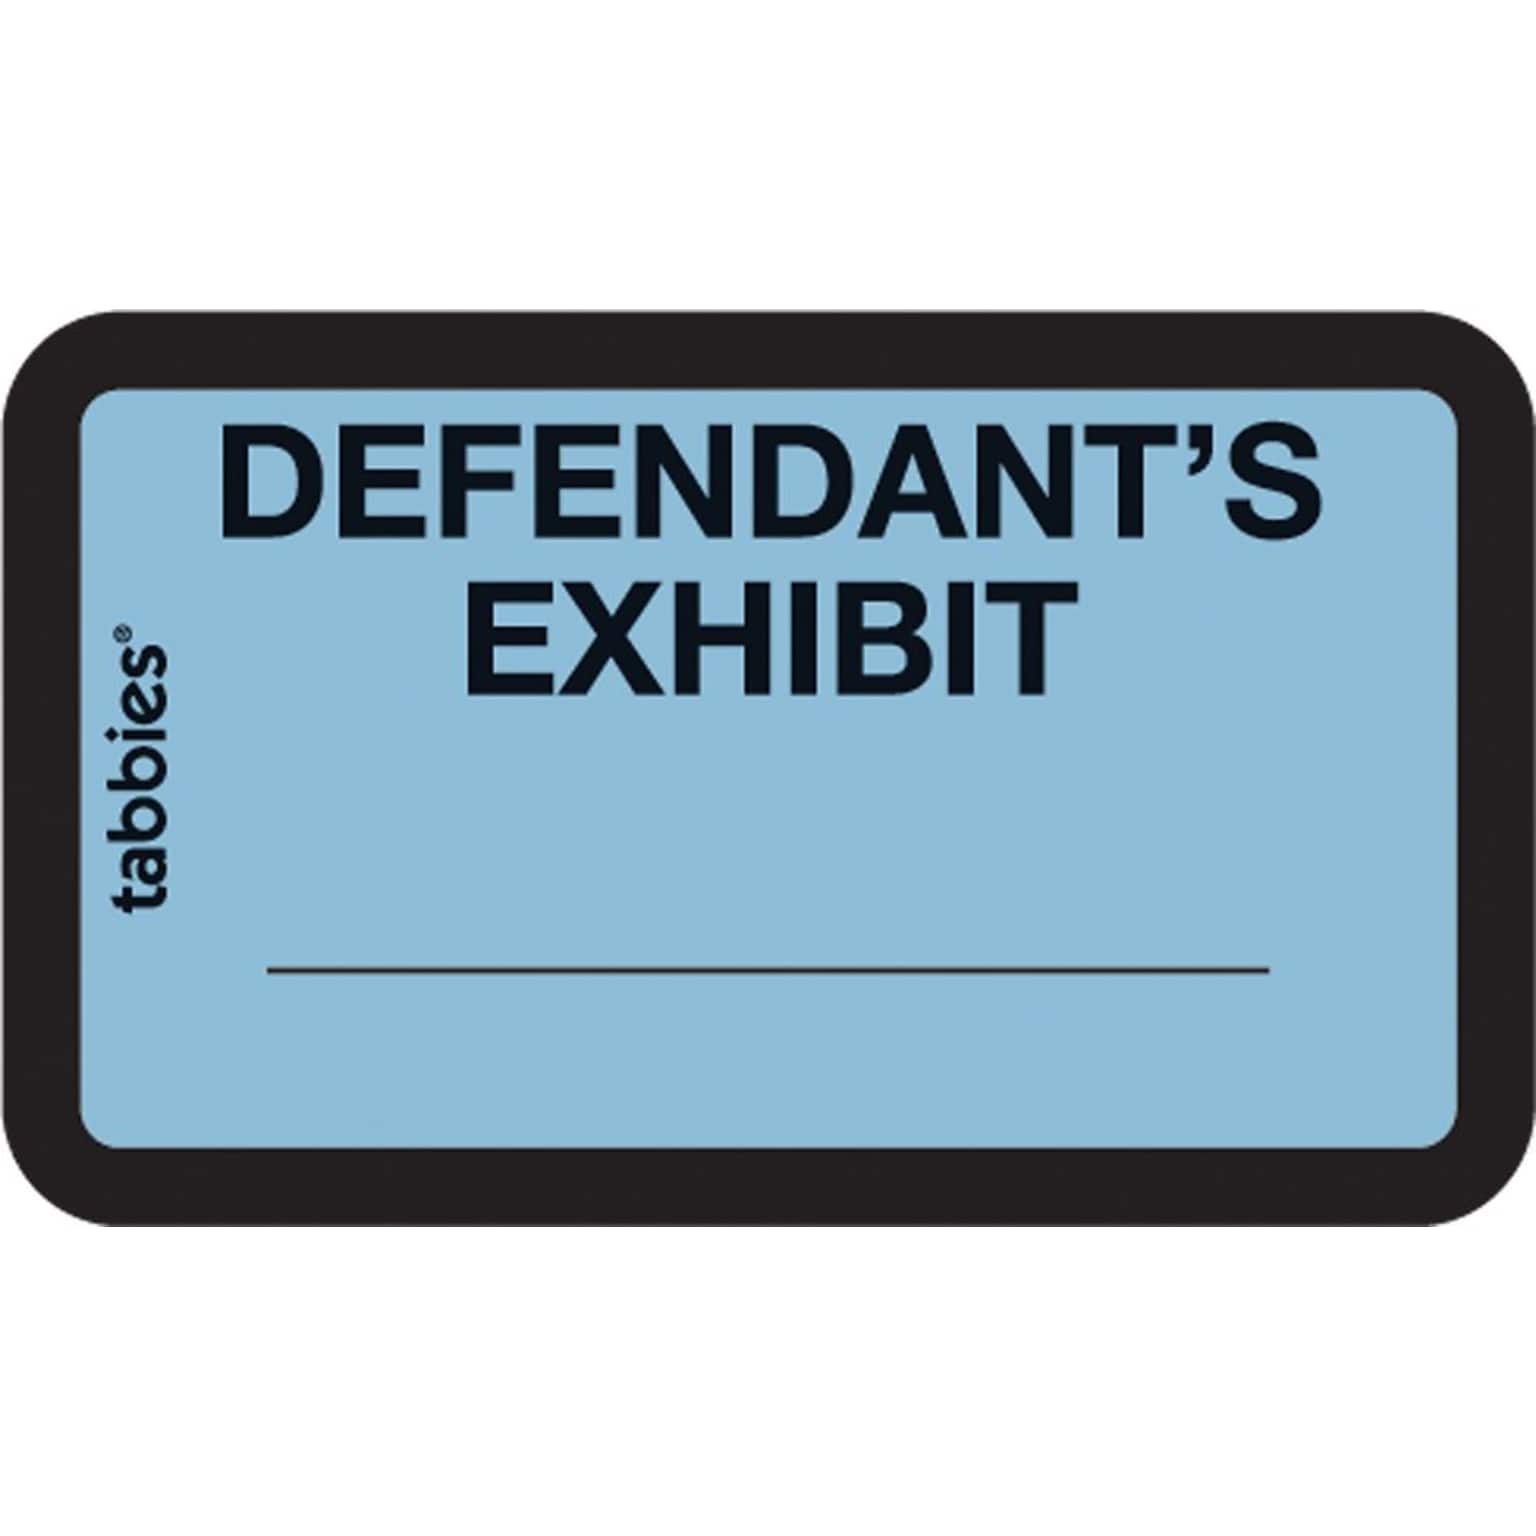 Tabbies Pre-Printed Labels - Defendants Exhibit, Self-Adhesive, 1x1-5/8, Blue, 252 Labels/Pack (58093)